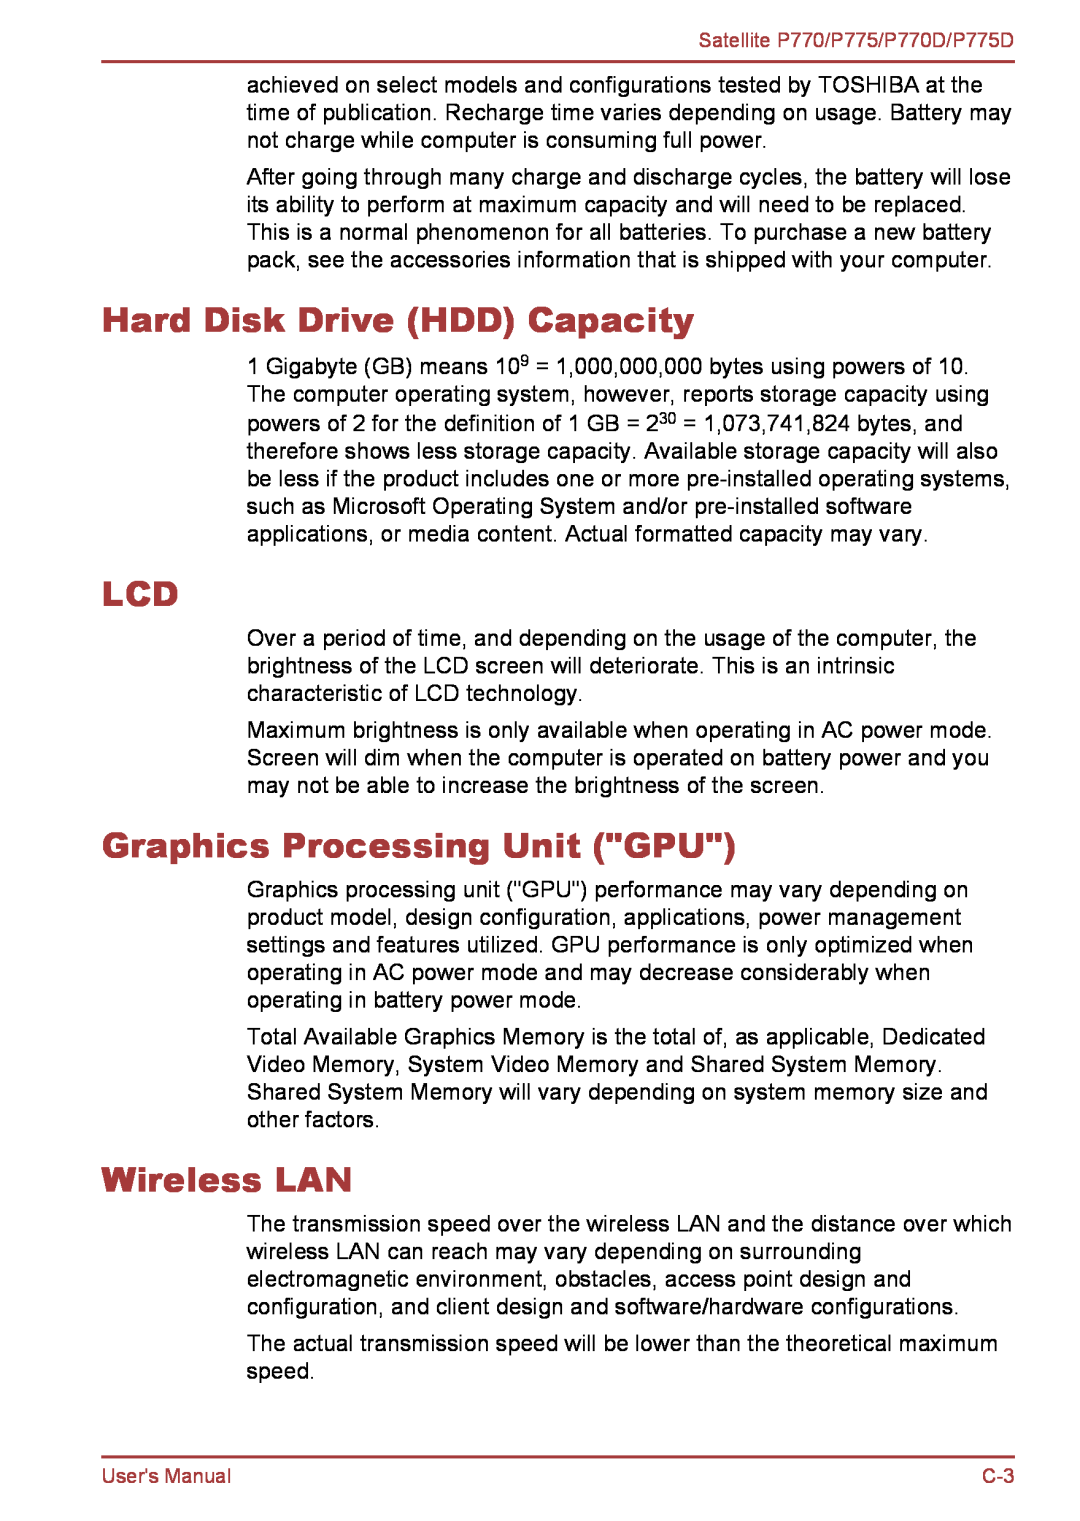 Toshiba P770 user manual Hard Disk Drive HDD Capacity, Graphics Processing Unit GPU, Wireless LAN 